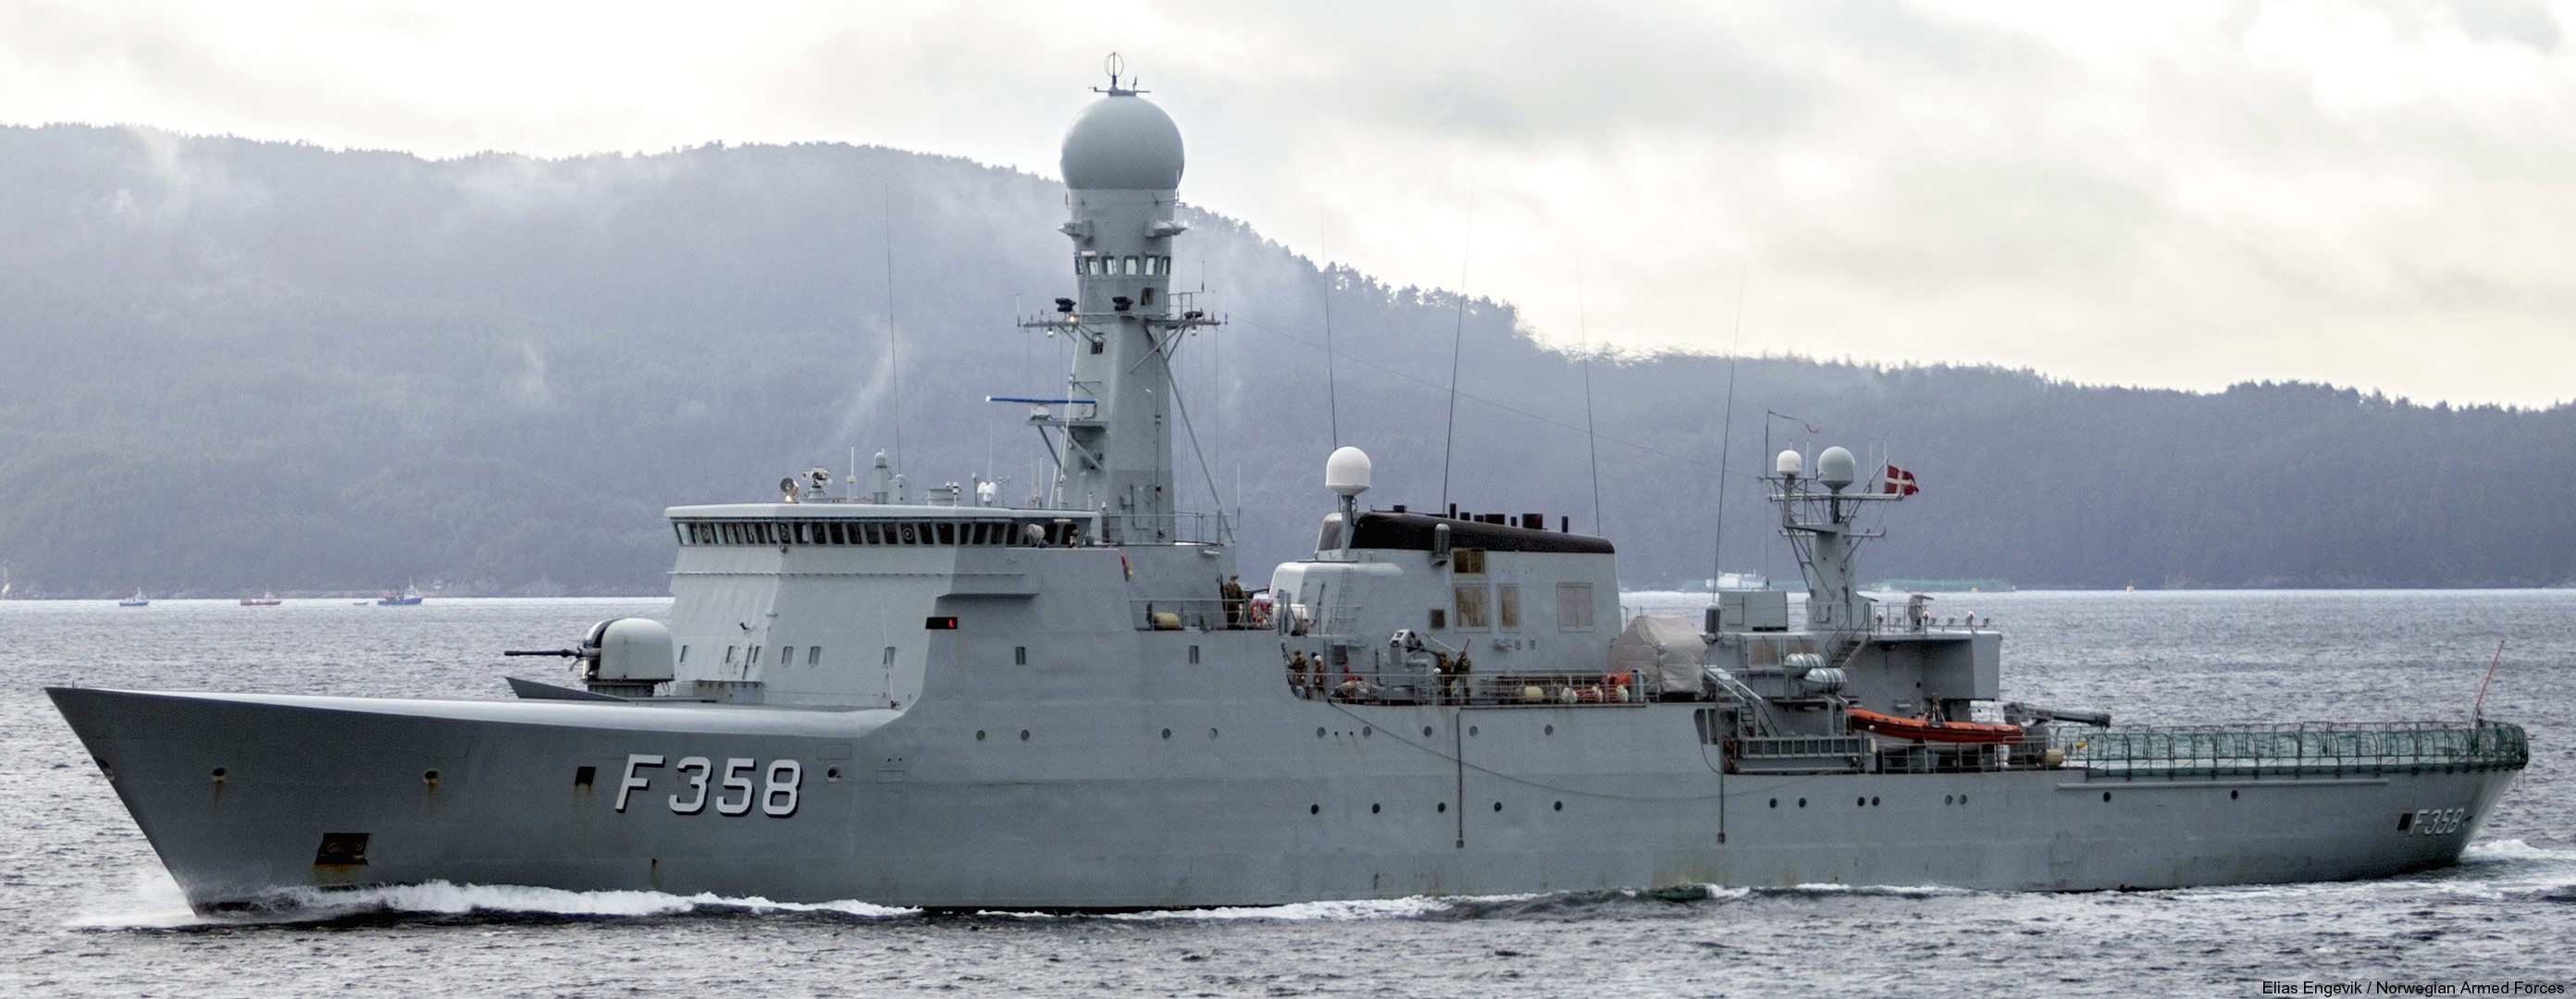 f-358 hdms triton thetis class ocean patrol frigate royal danish navy kongelige danske marine kdm inspektionsskibet 25